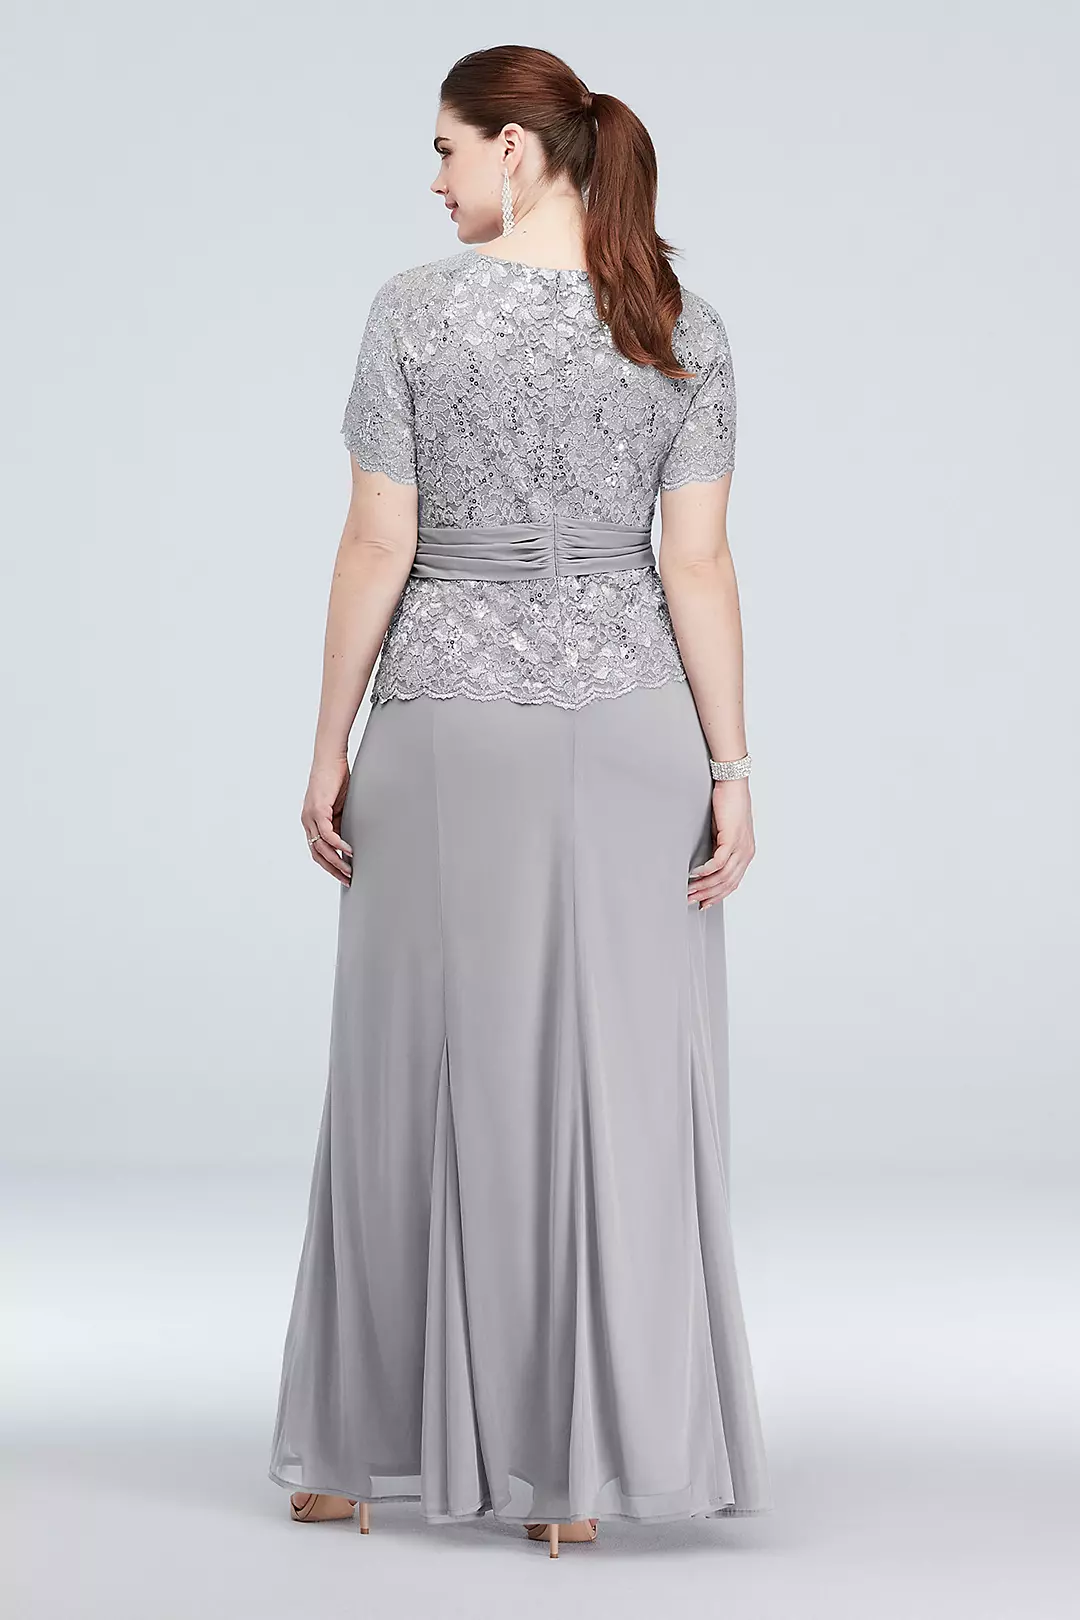 Chiffon Short-Sleeve Lace Plus Size Dress Image 2